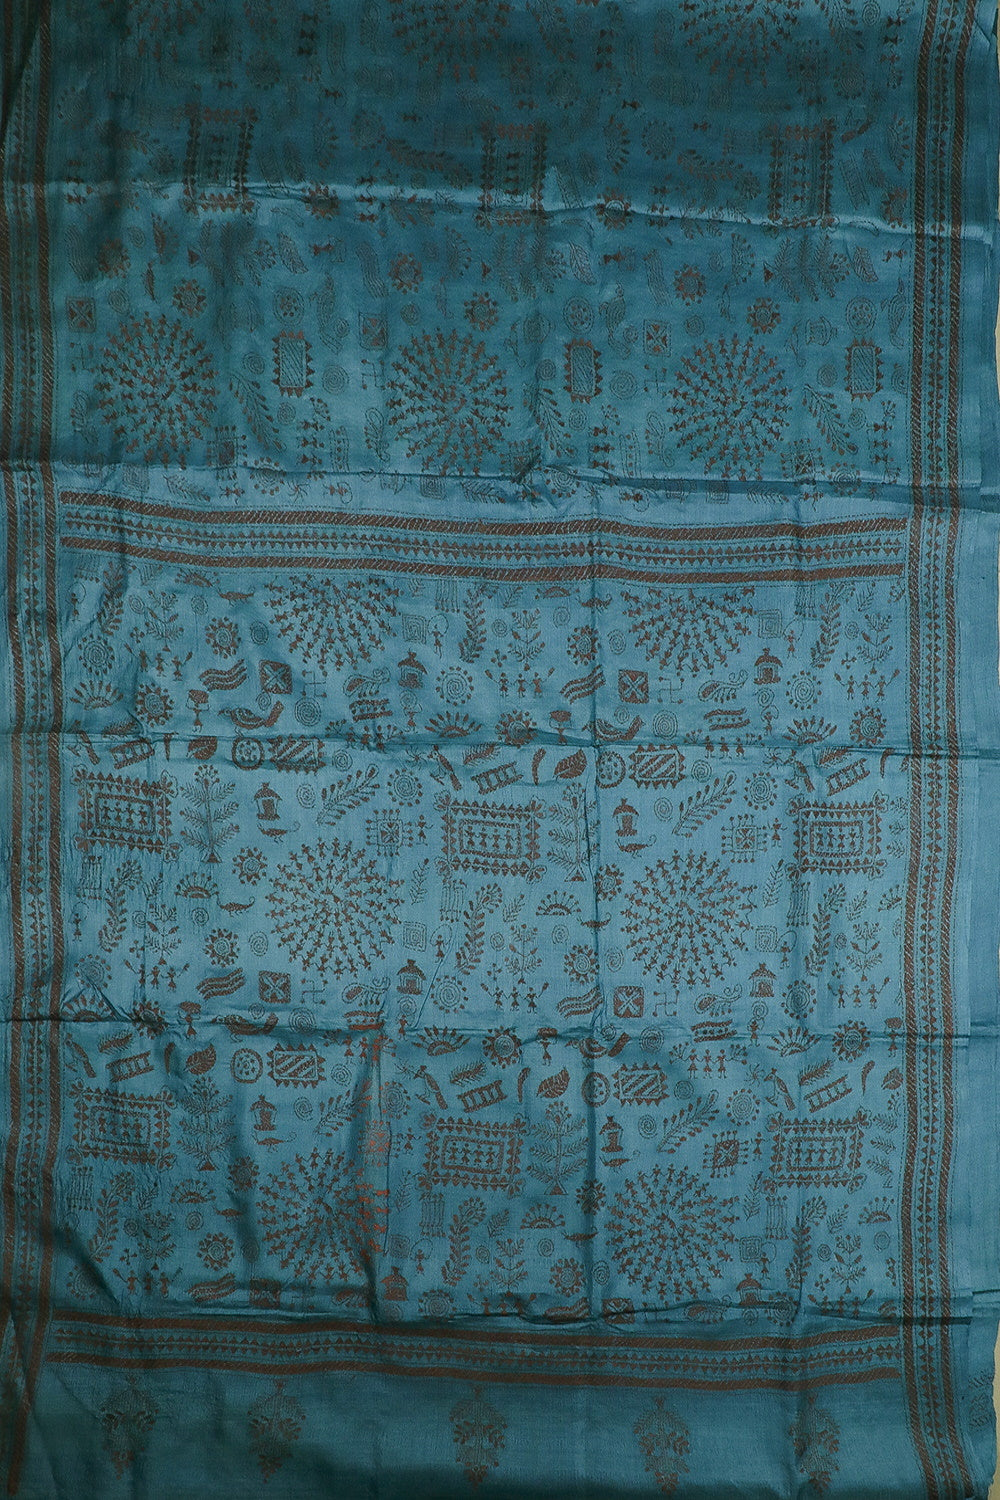 Embroidered Sarees - Matkatus